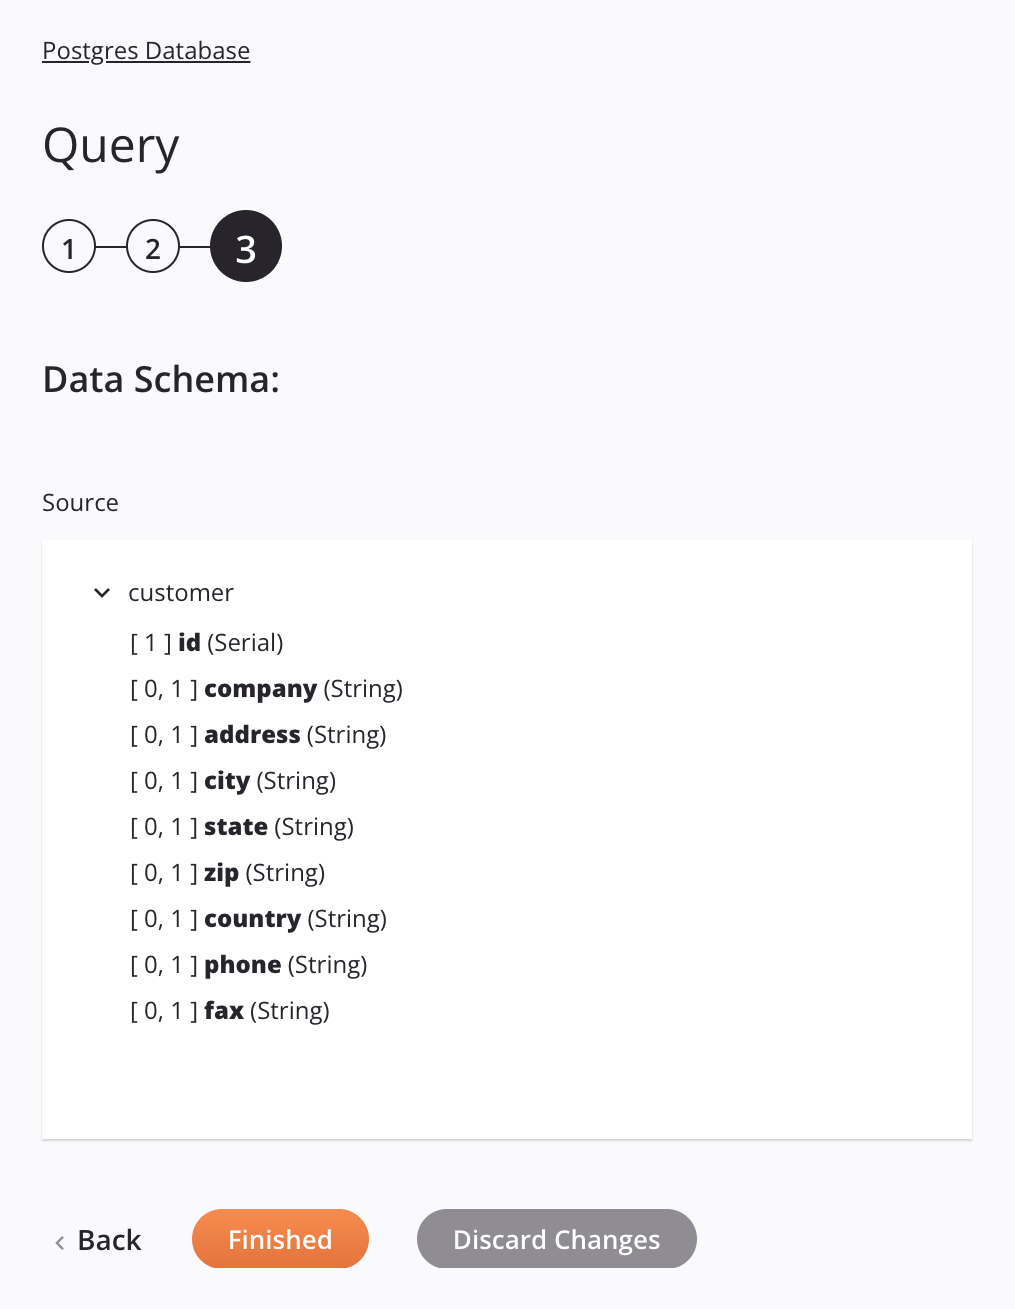 database query step 3 data schema customer